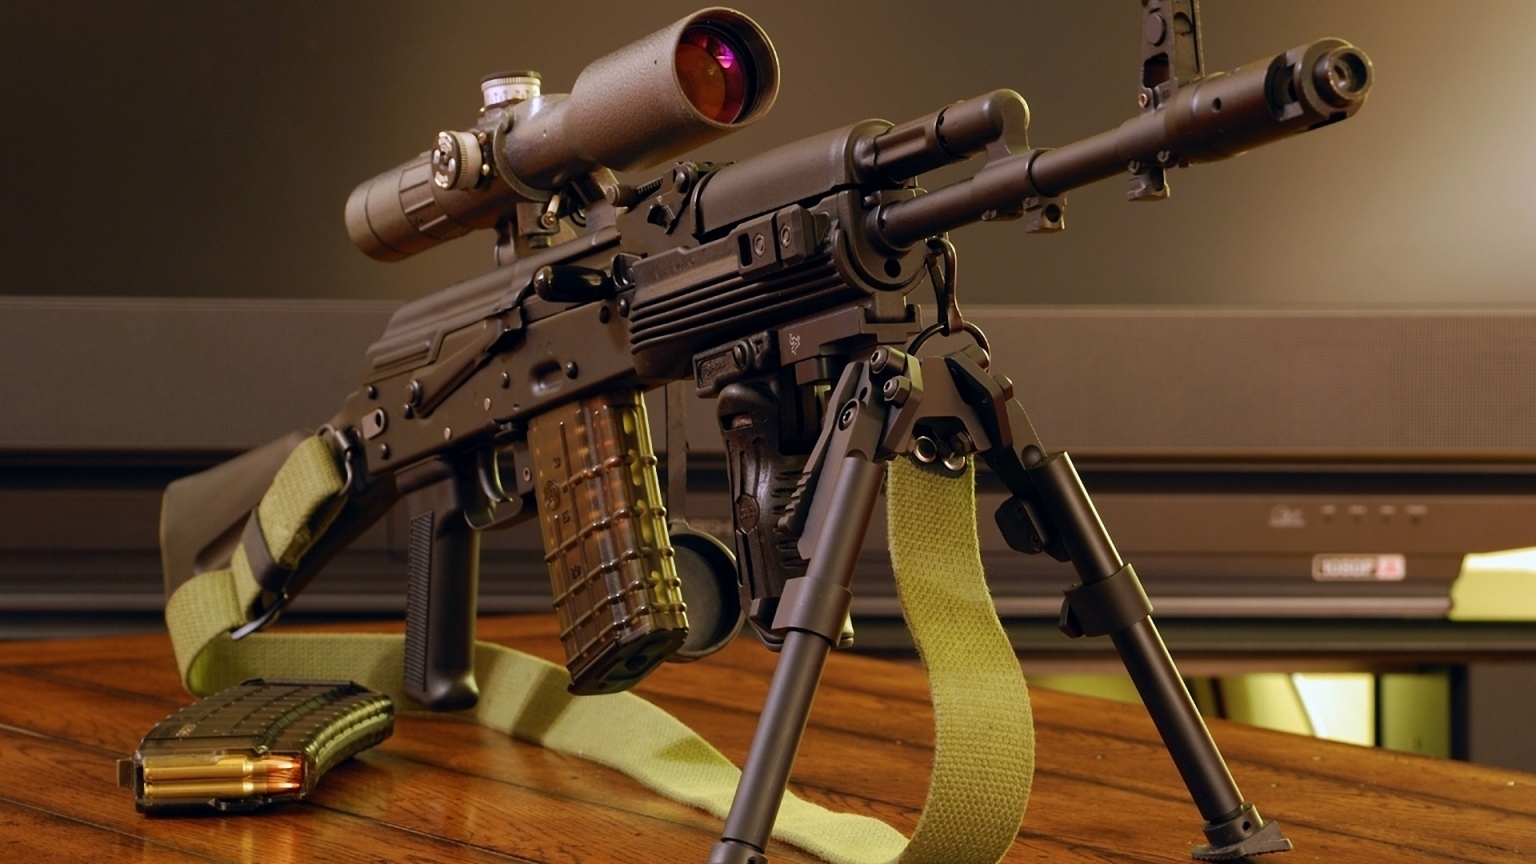 Automatic Gun AK-101 for 1536 x 864 HDTV resolution